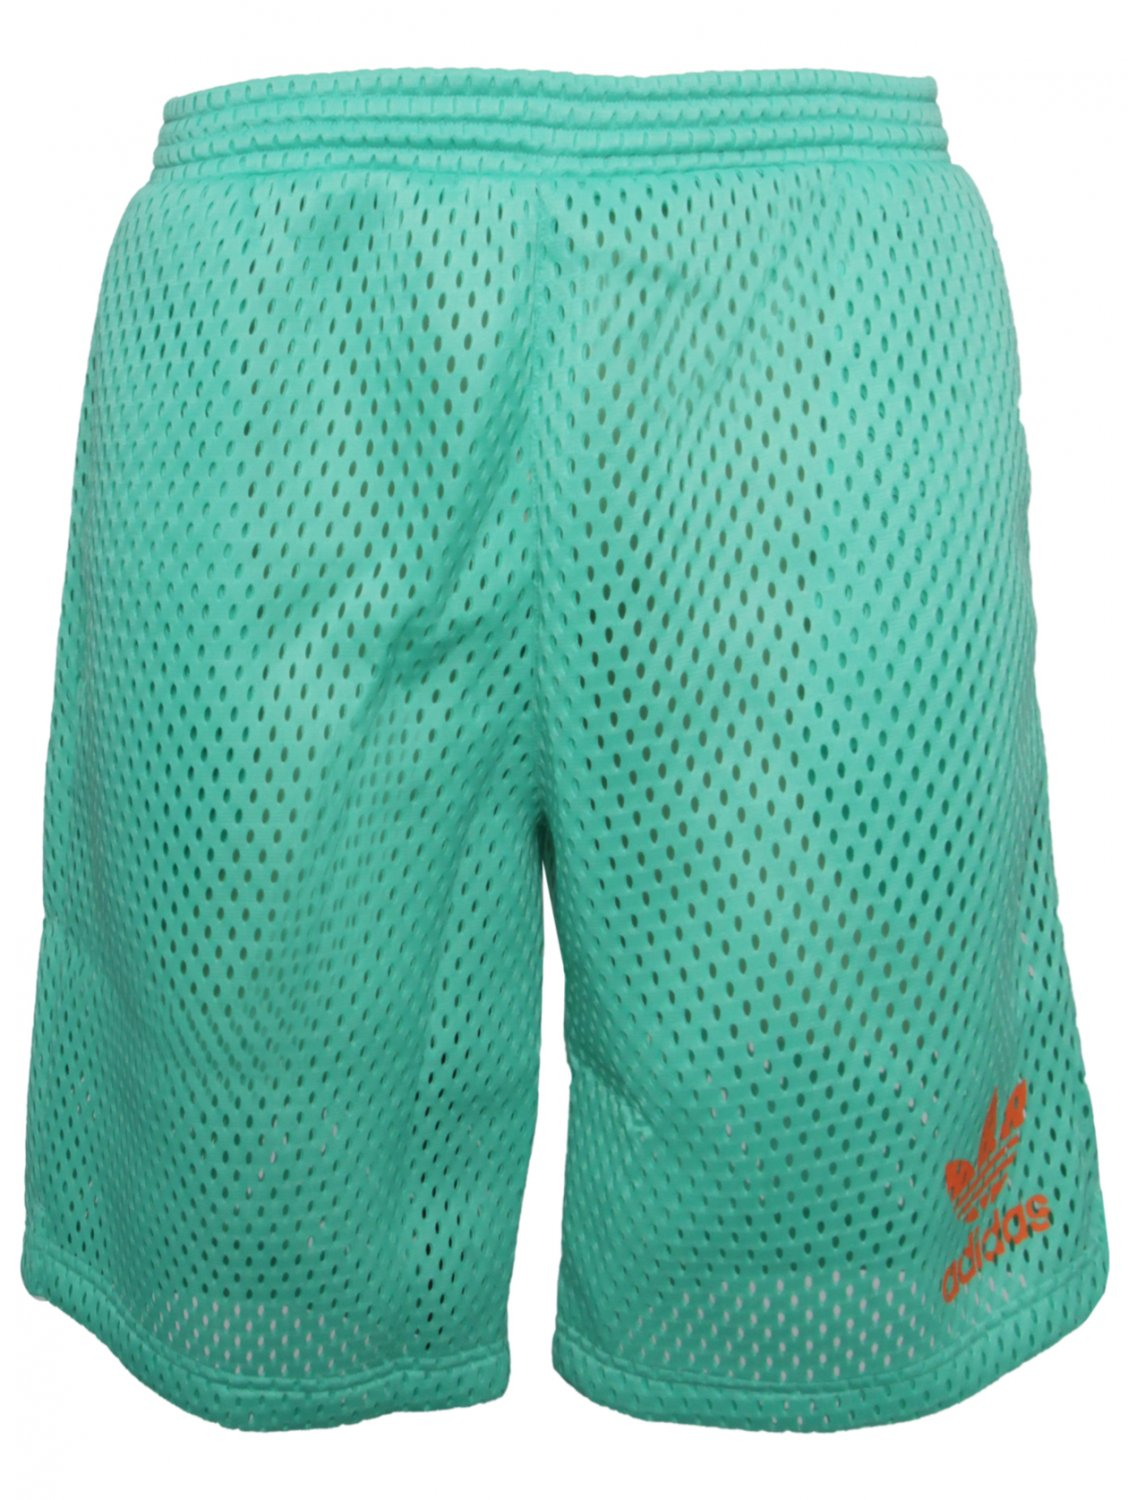 Jeremy Scott For Adidas Bermuda Shorts In Green For Men Lyst